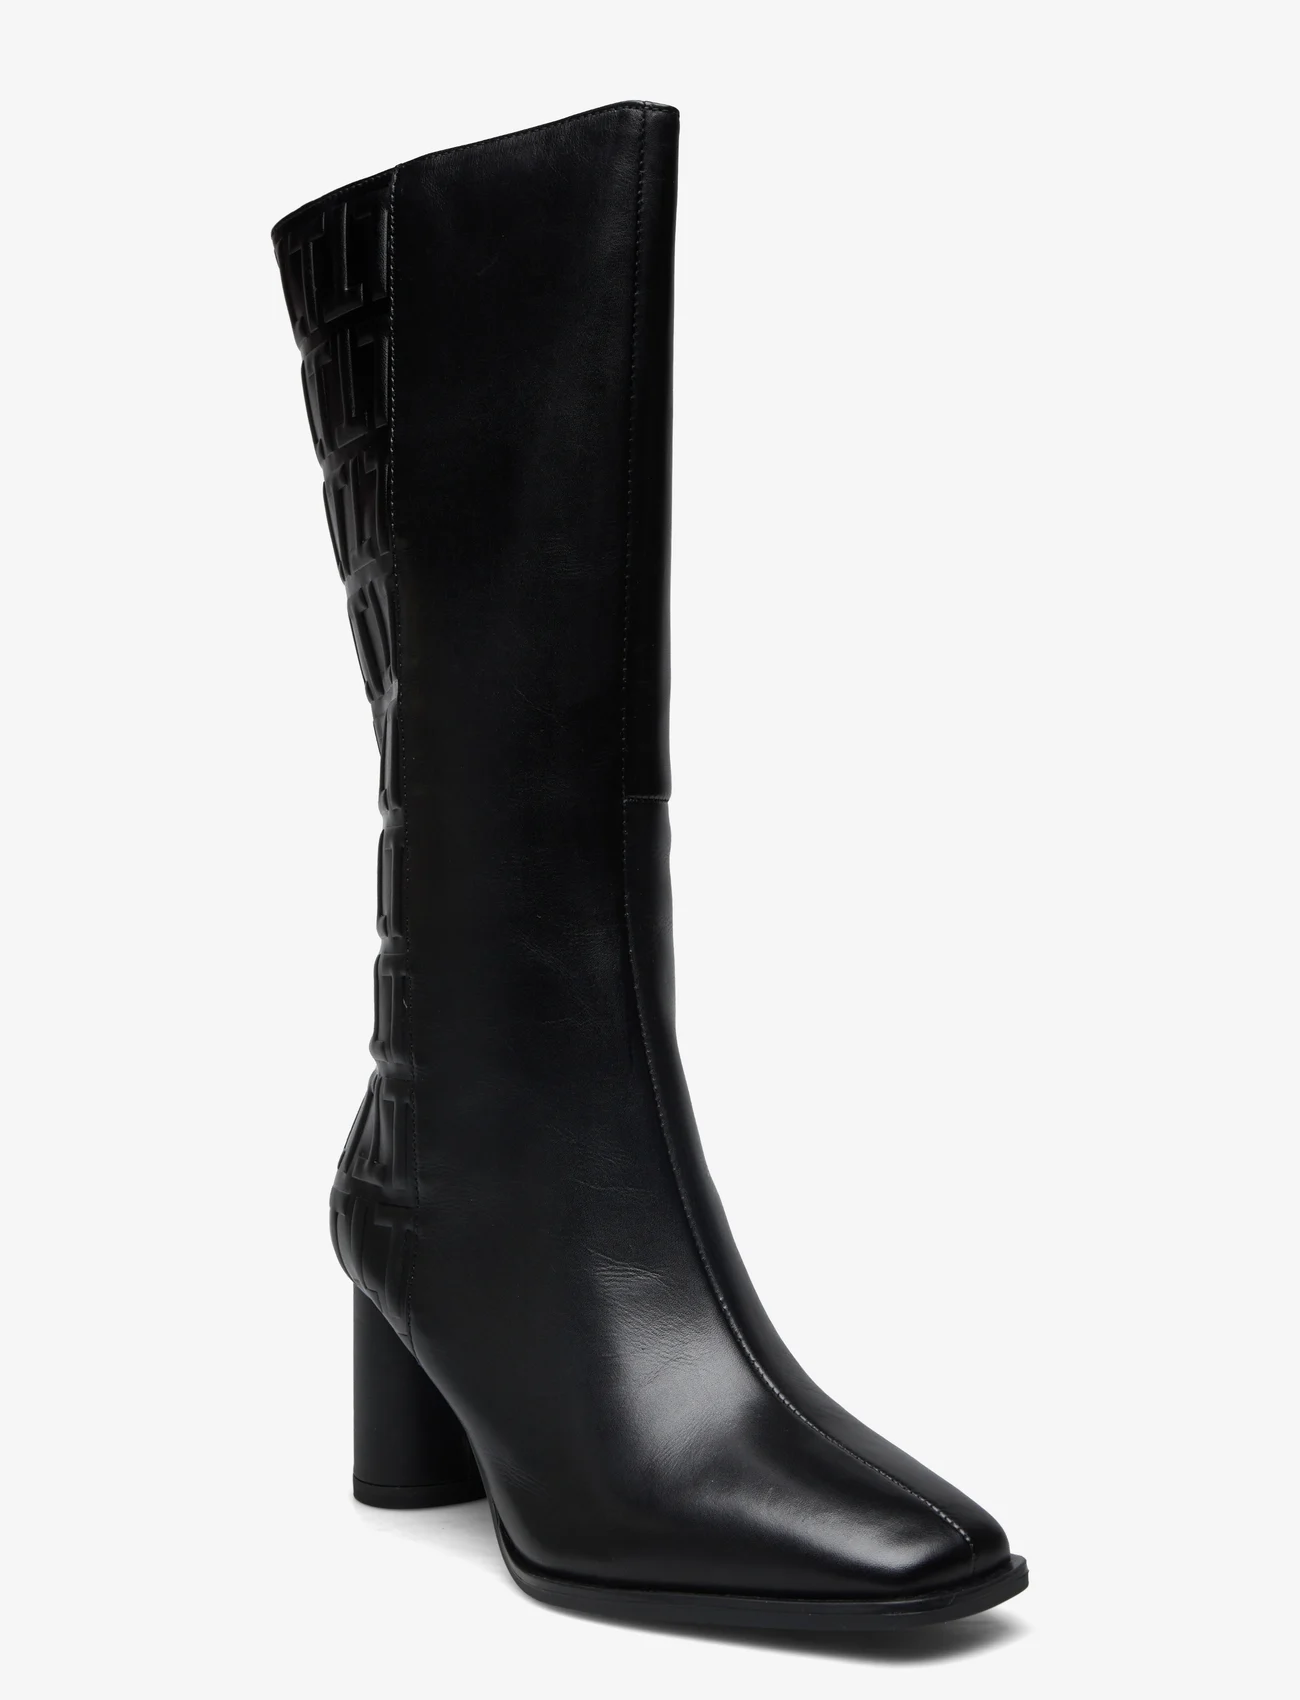 Tamaris - Woms Boots - Lycoris - kniehohe stiefel - black - 0